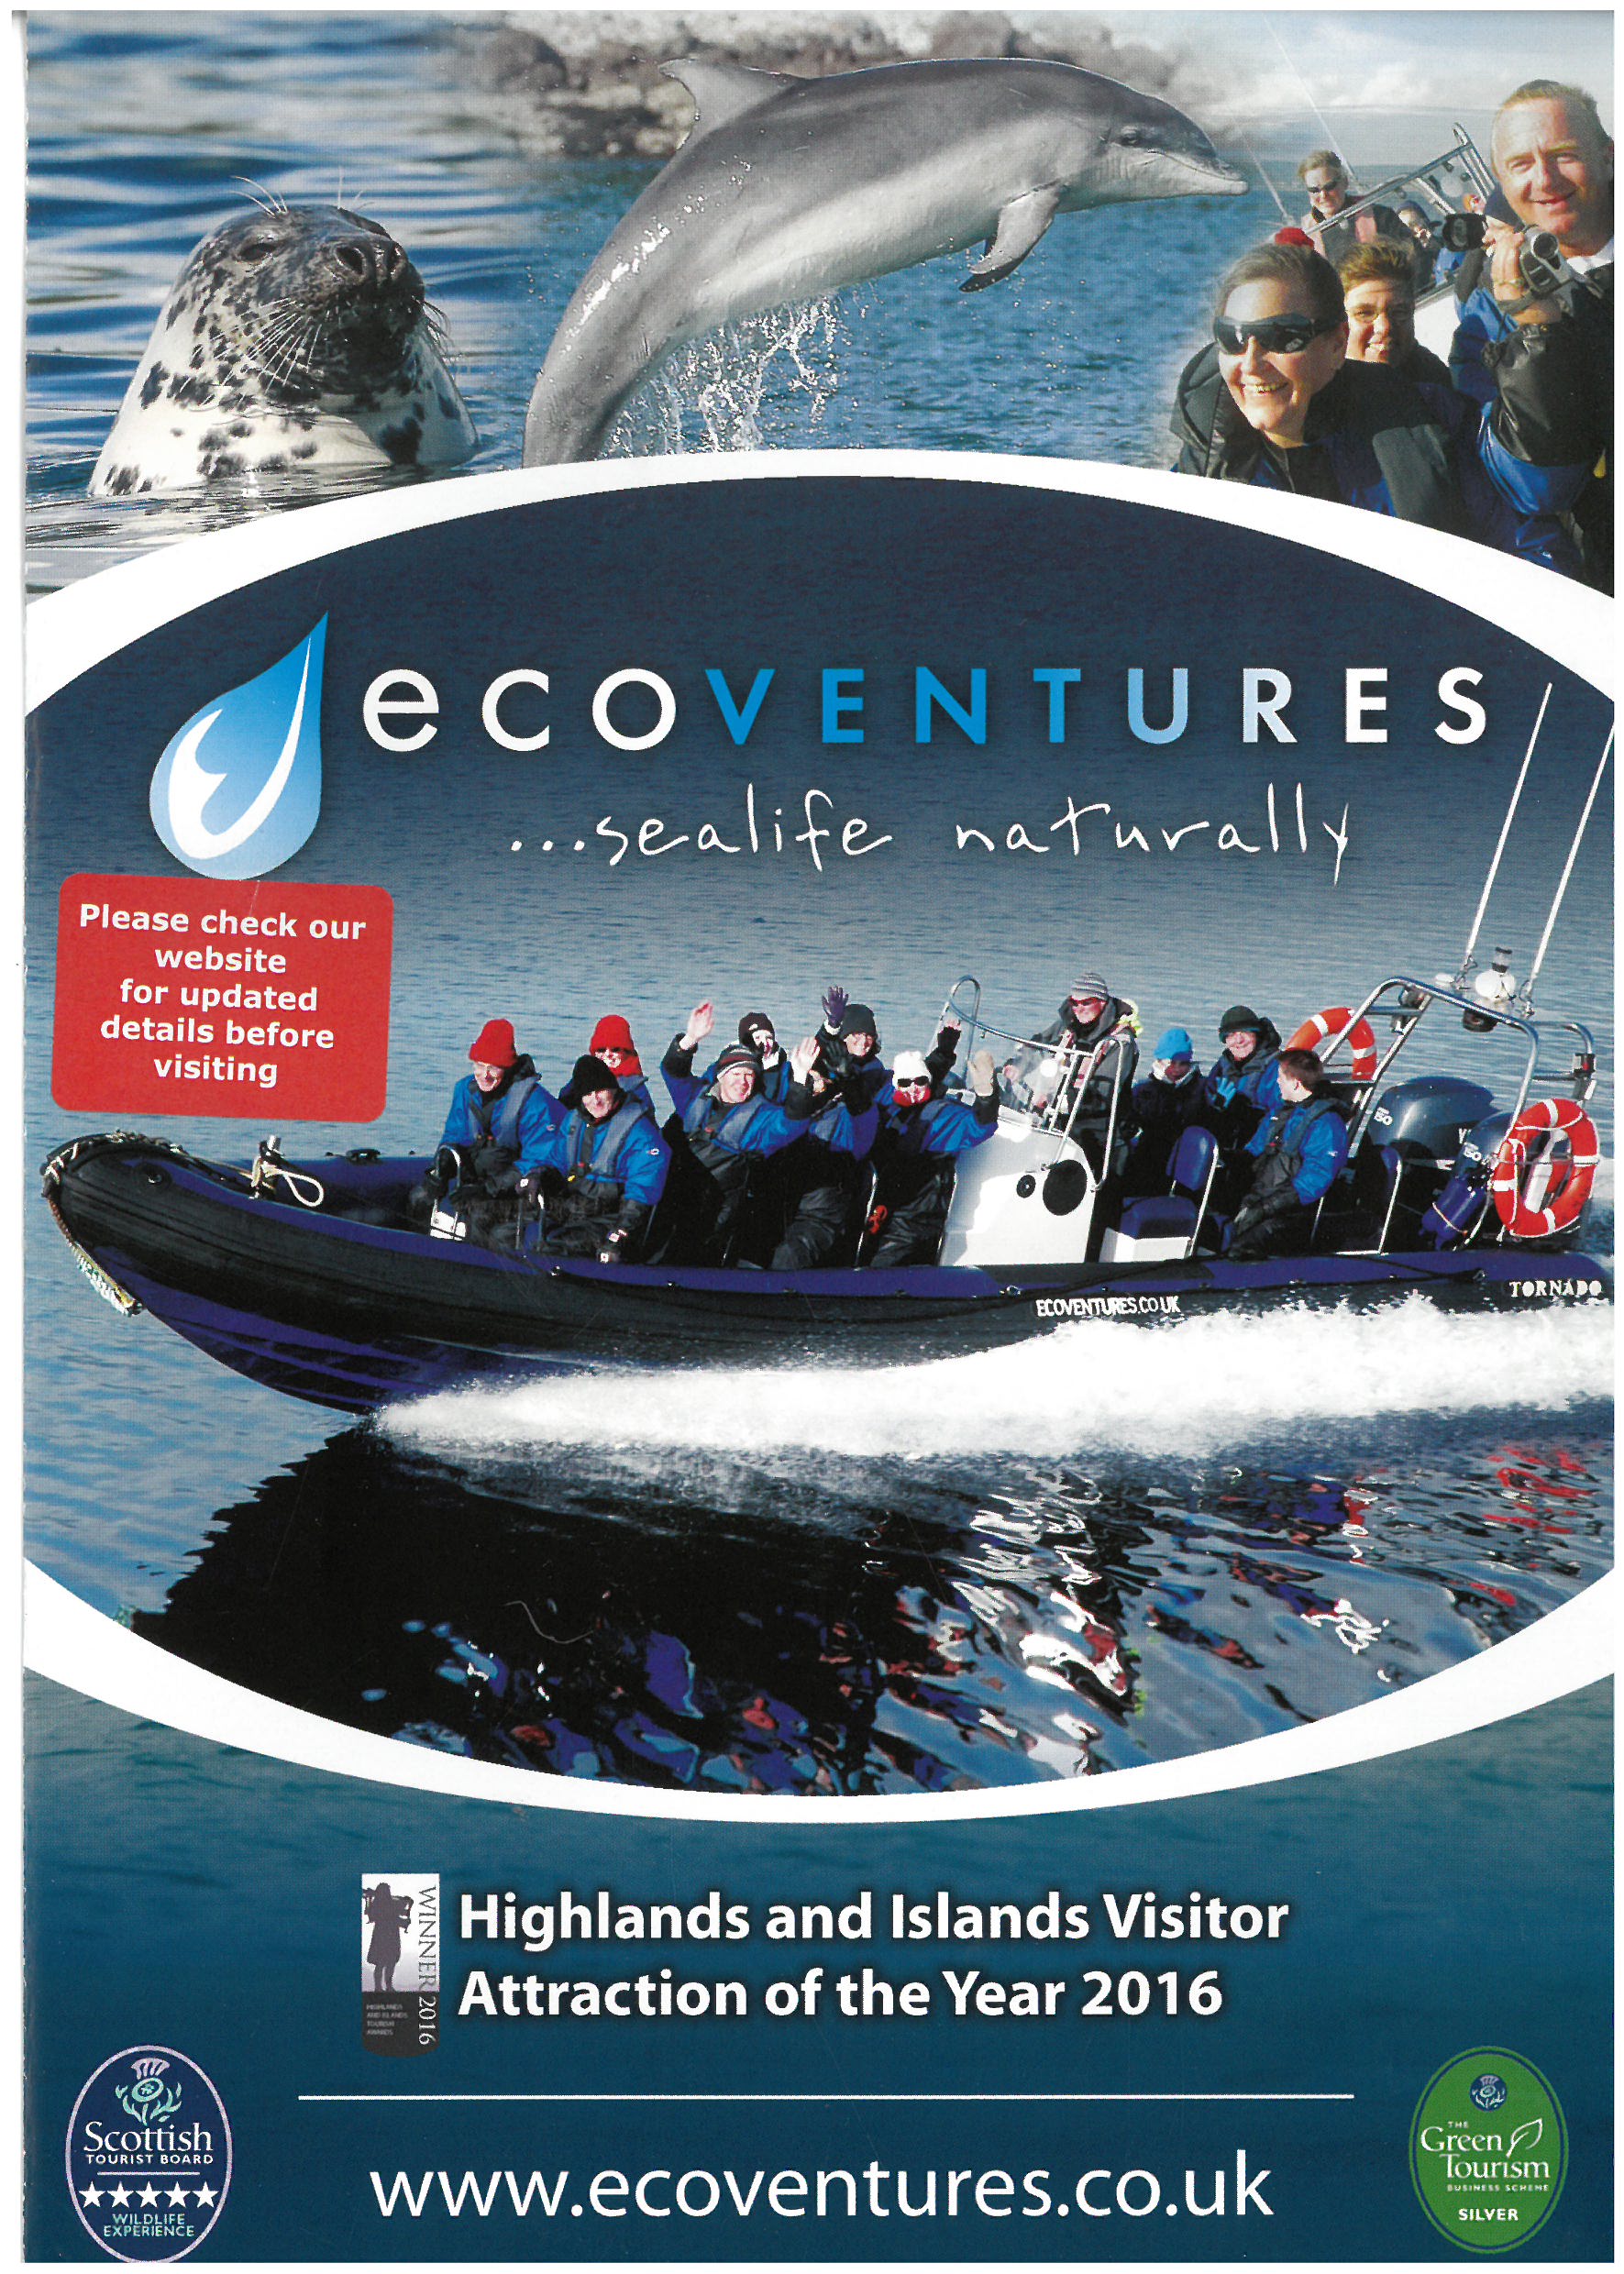 Ecoventures brochure full size